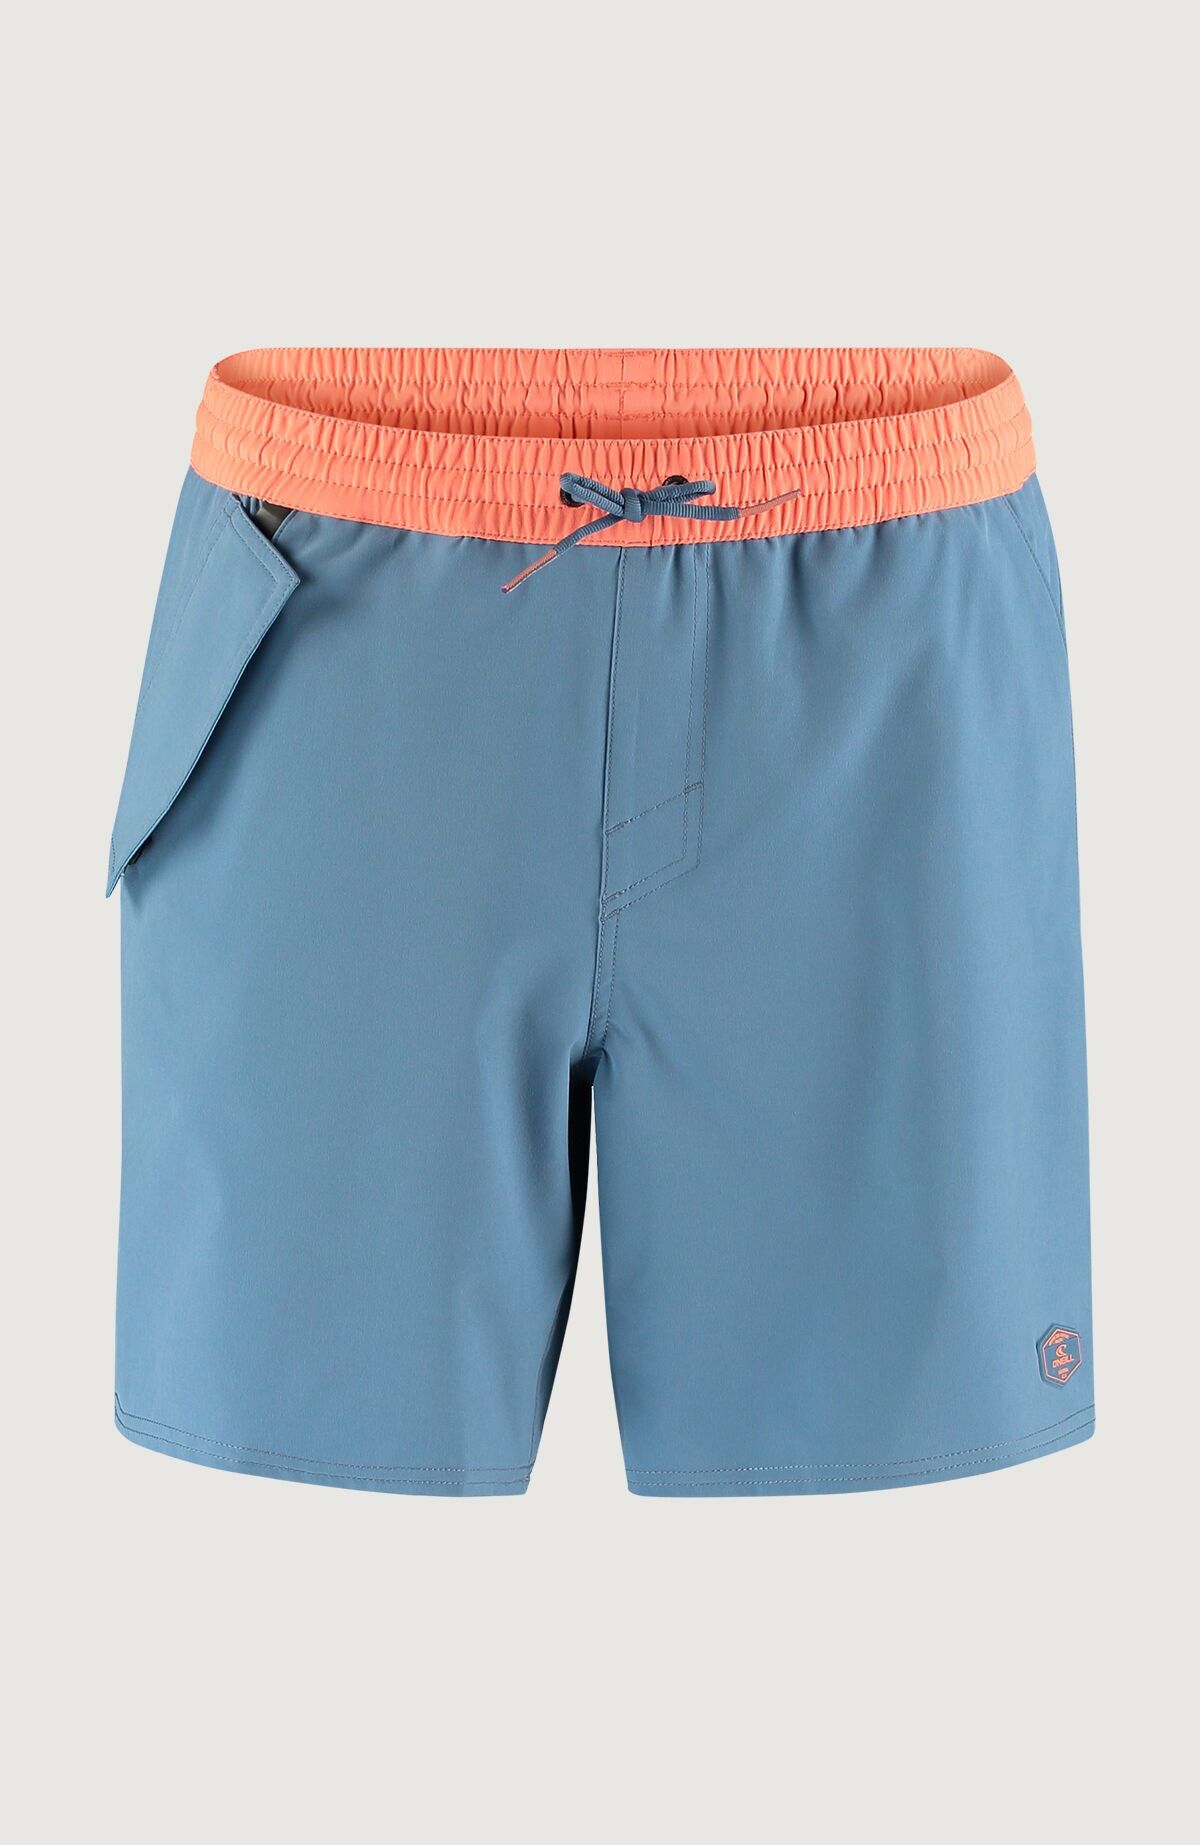 O'Neill Wp-Pocket Shorts - Boardshort - Heren